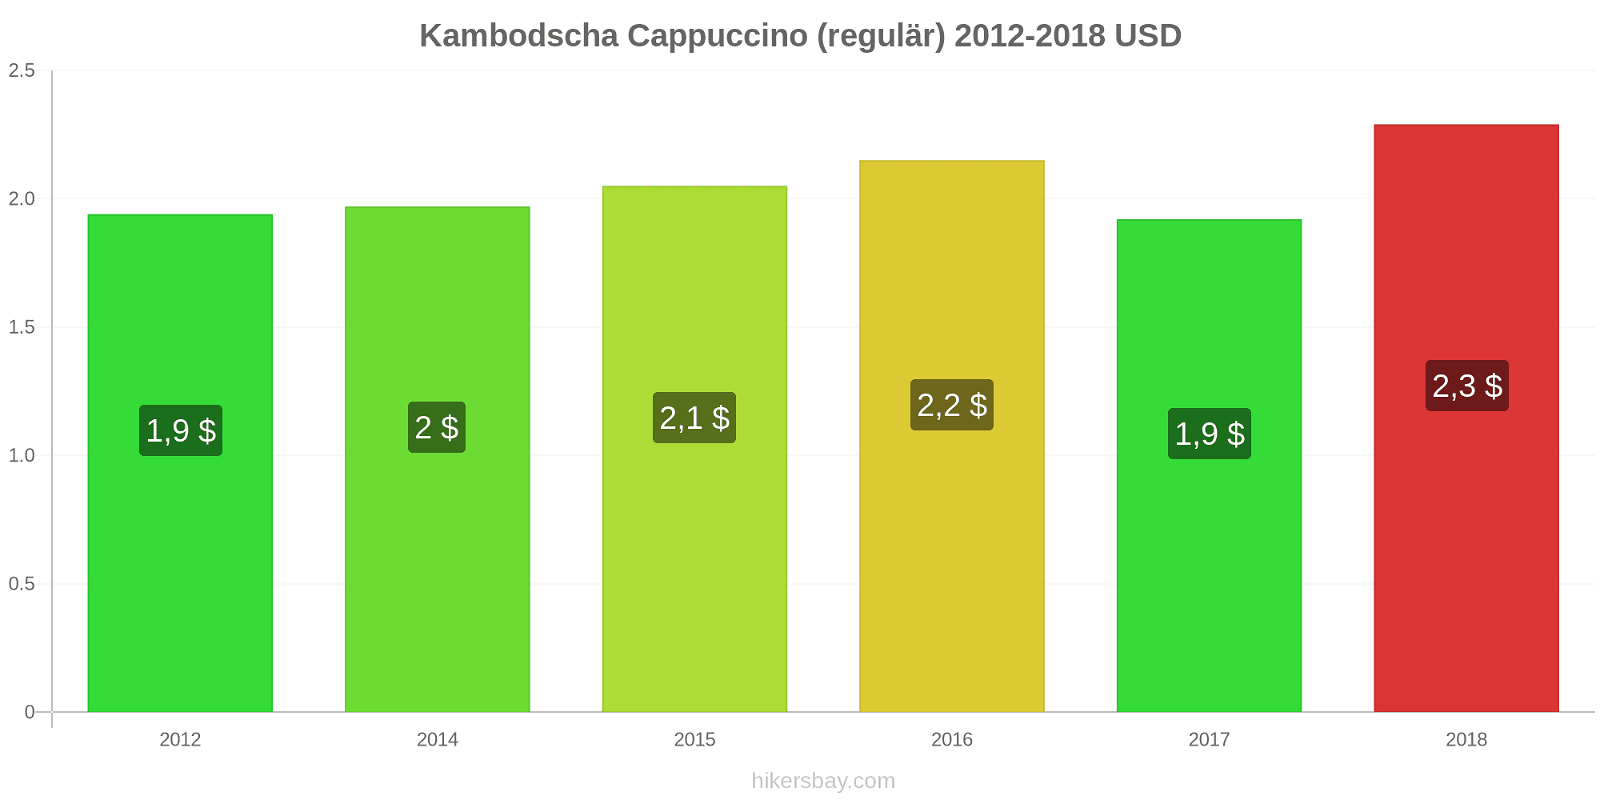 Kambodscha Preisänderungen Cappuccino (regulär) hikersbay.com